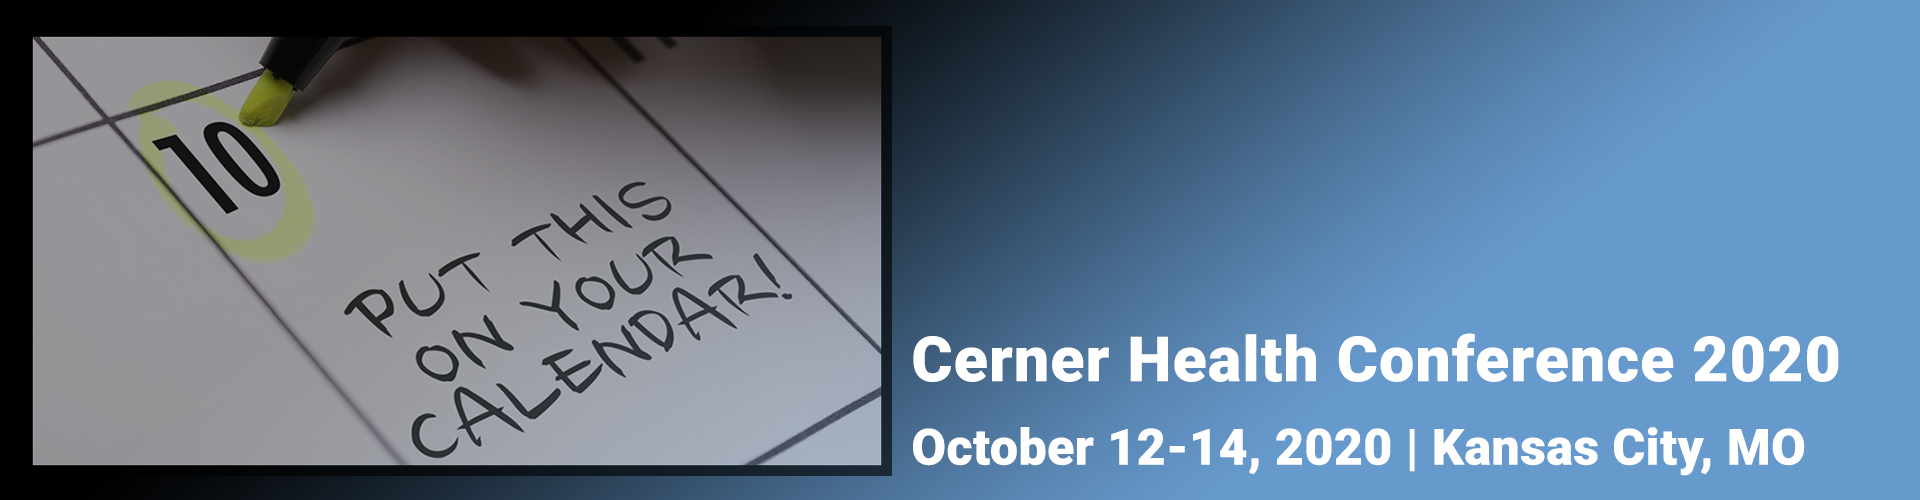 Calendar-Notice-Header-Cerner20